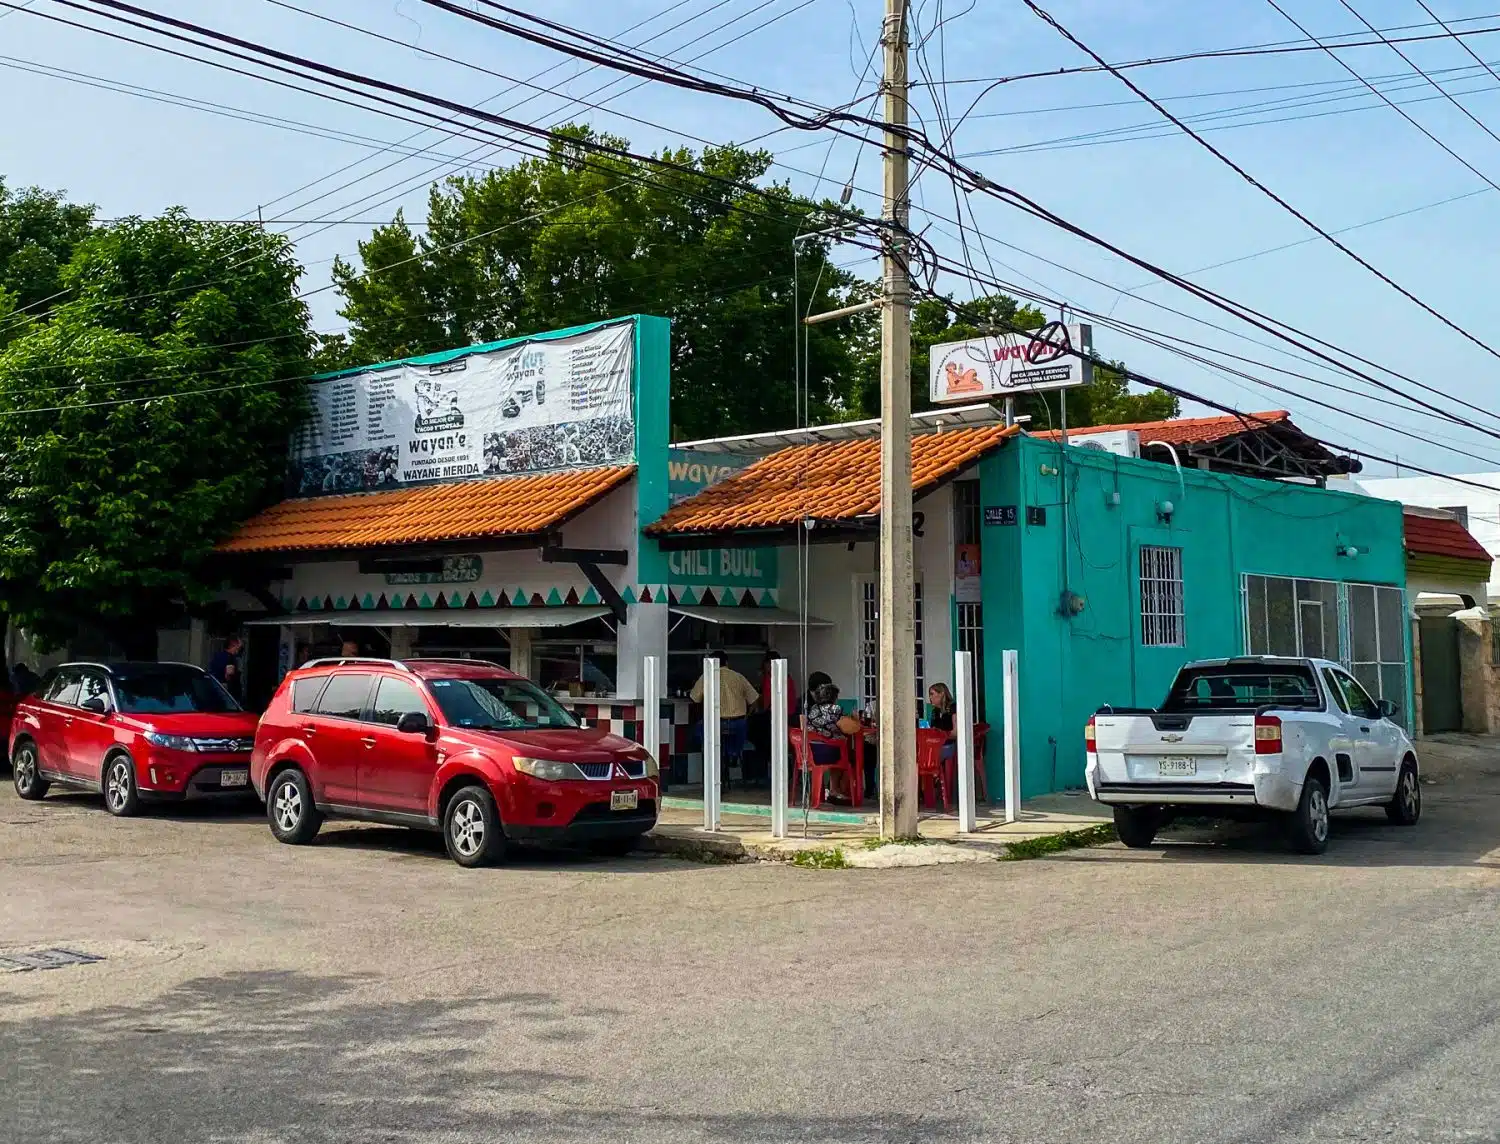 Wayan'e: a small, super popular taco place in Merida.